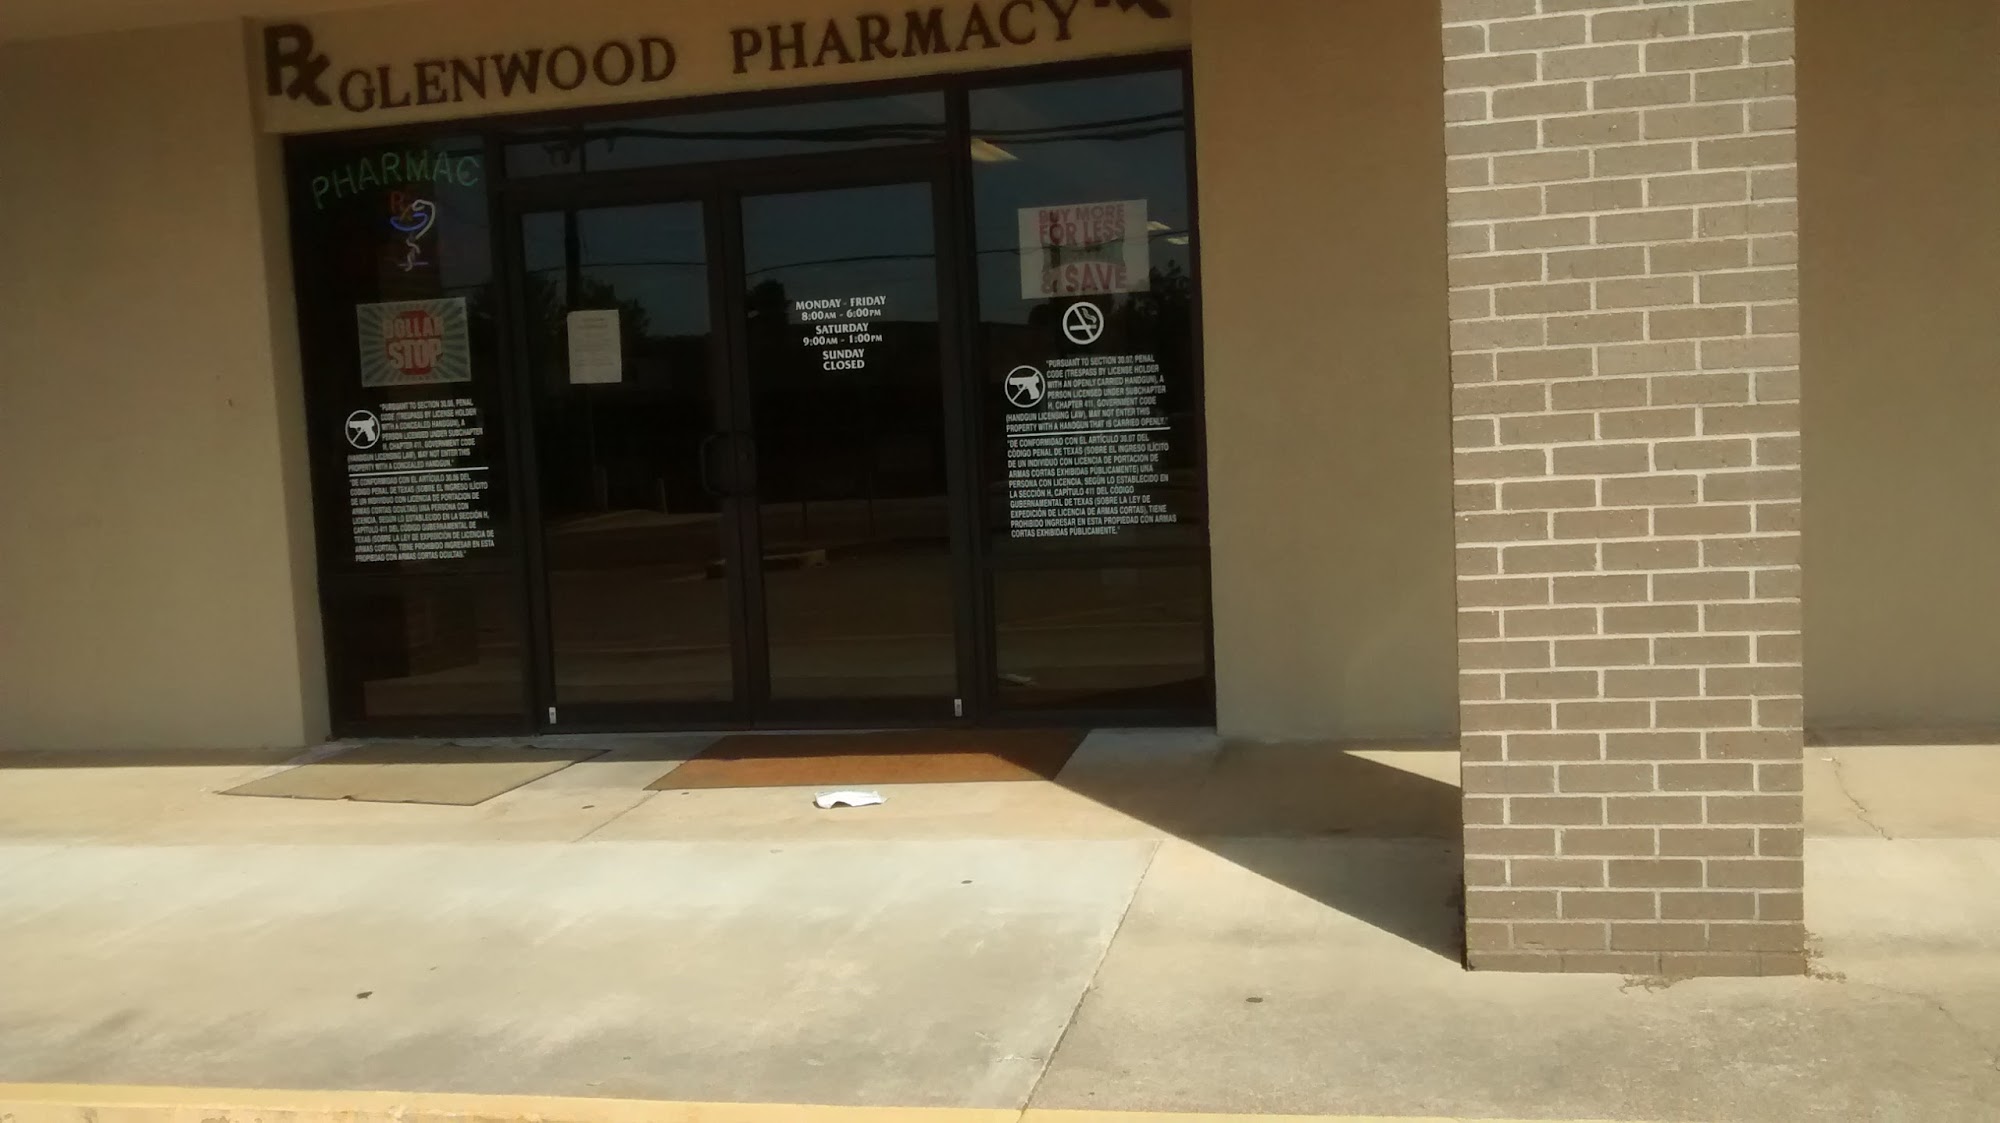 Glenwood Pharmacy